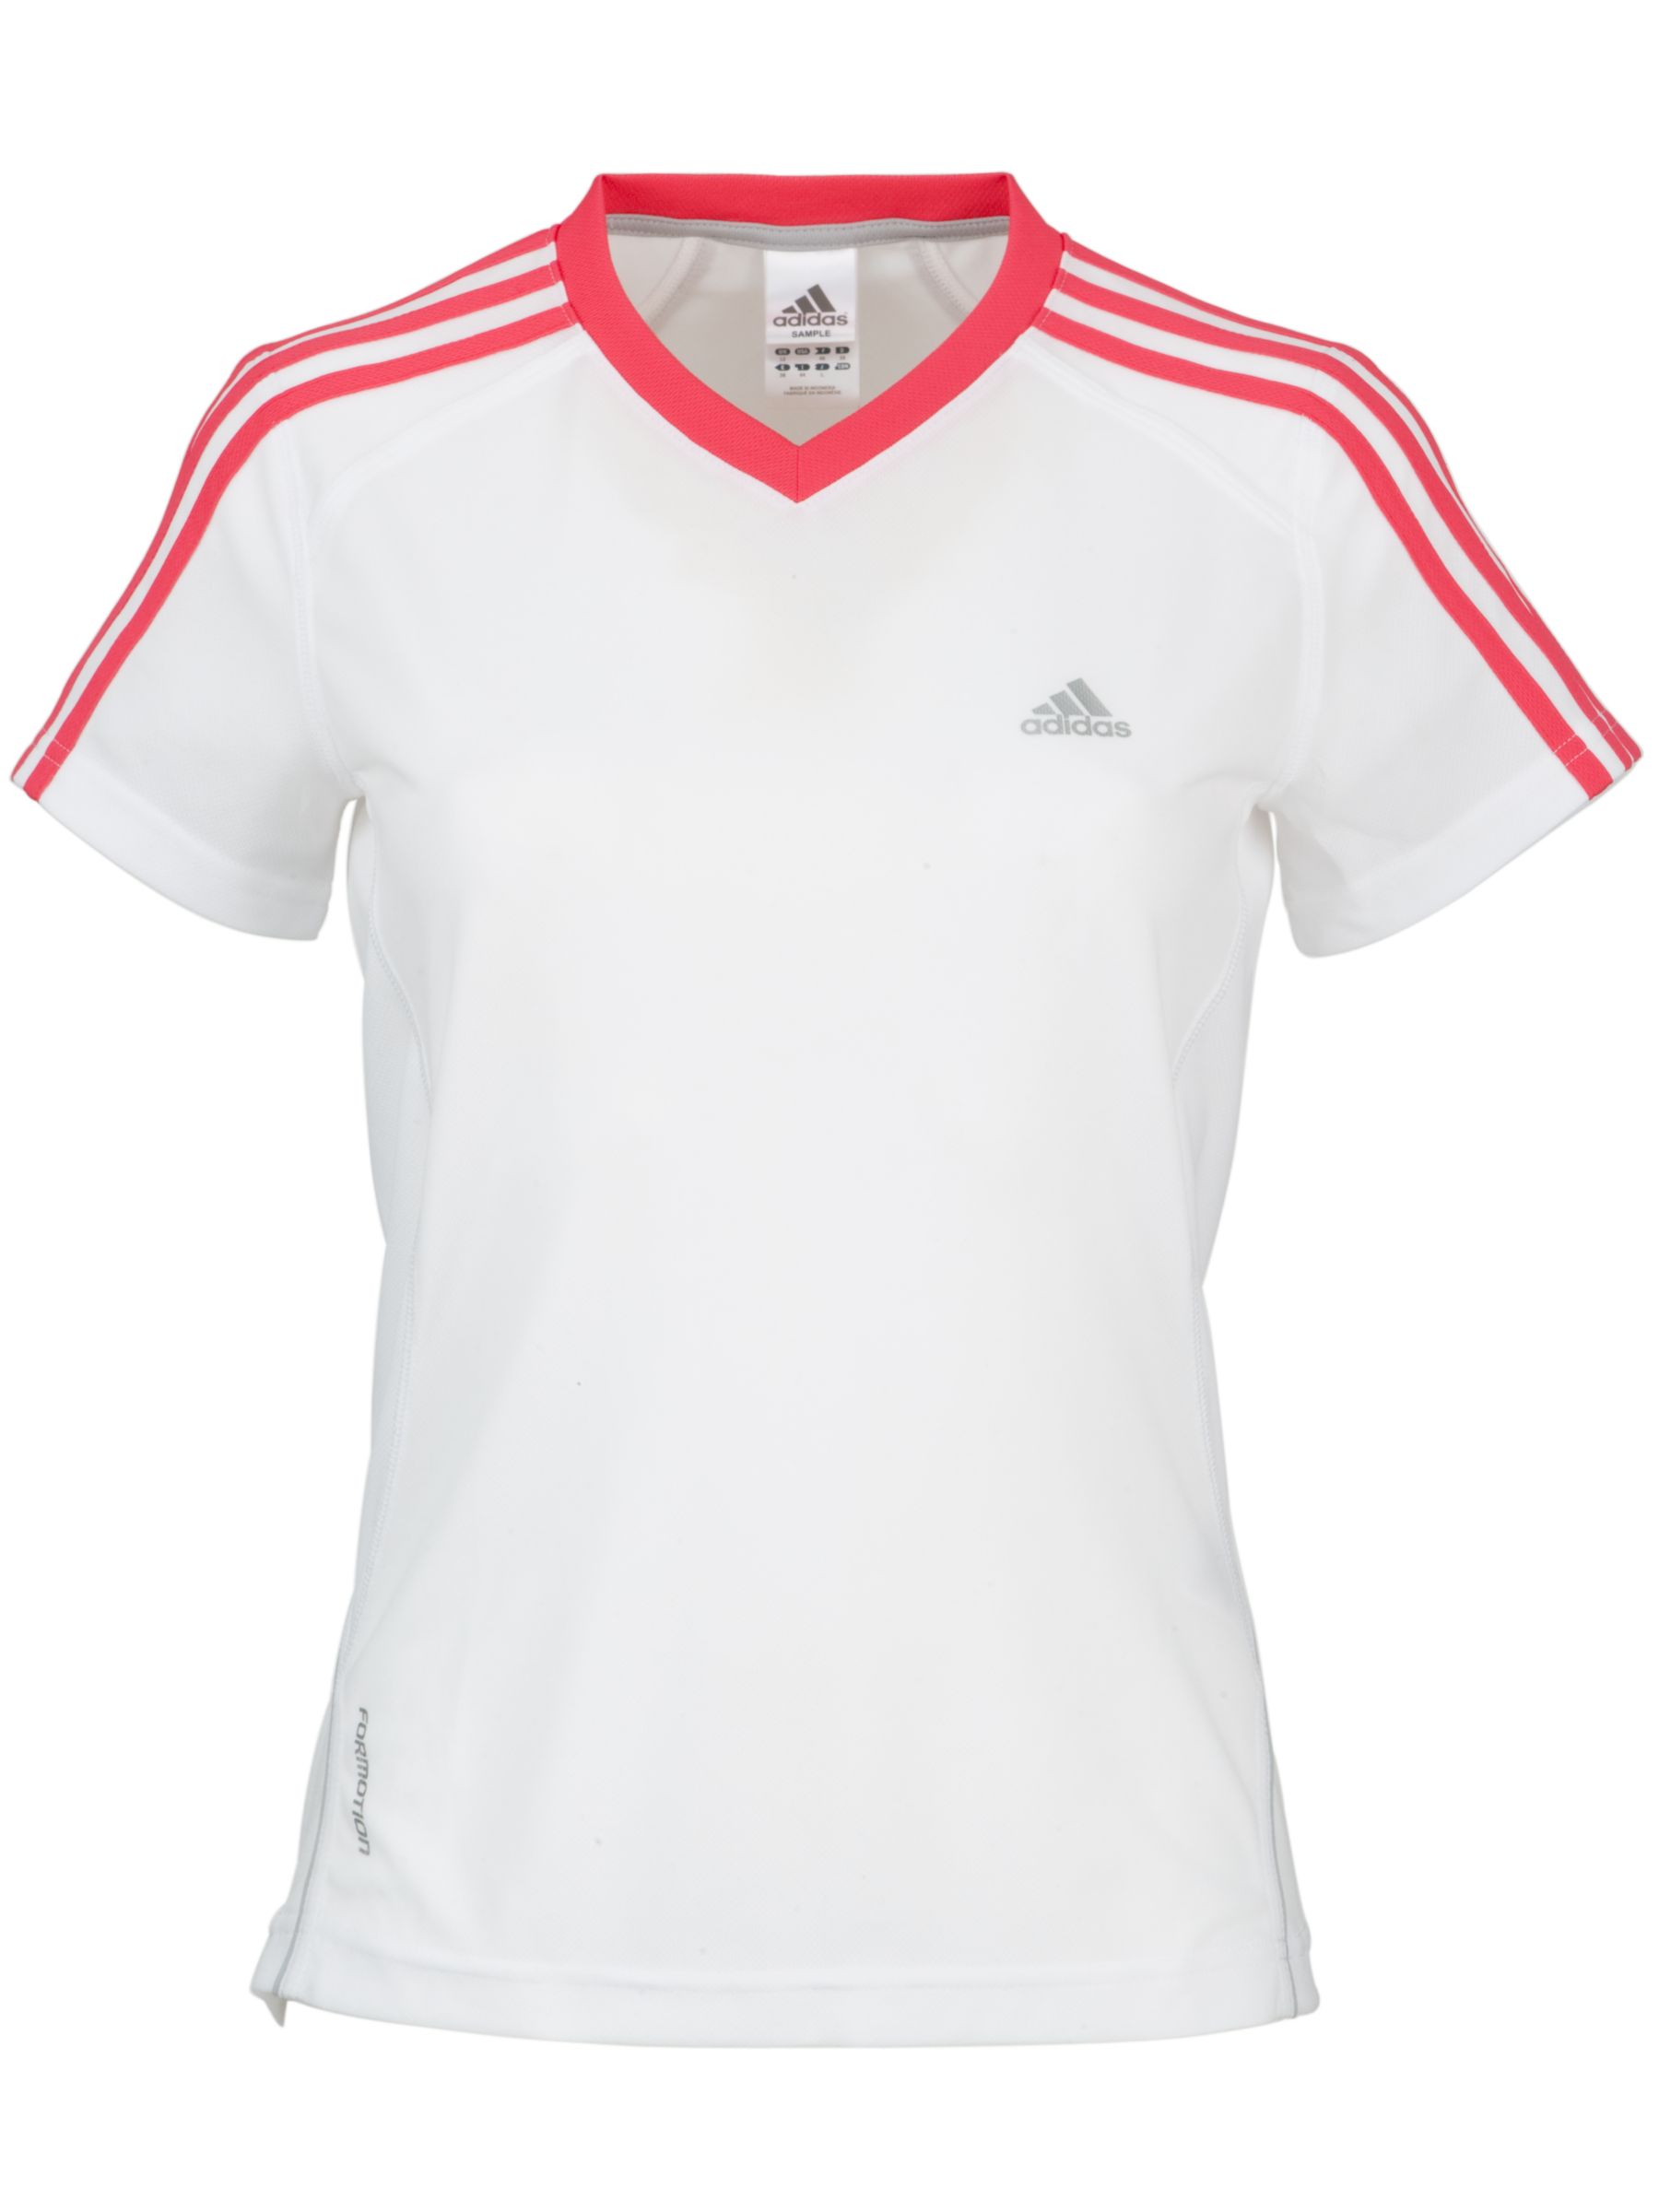 Adidas Response Short Sleeve T-Shirt, White